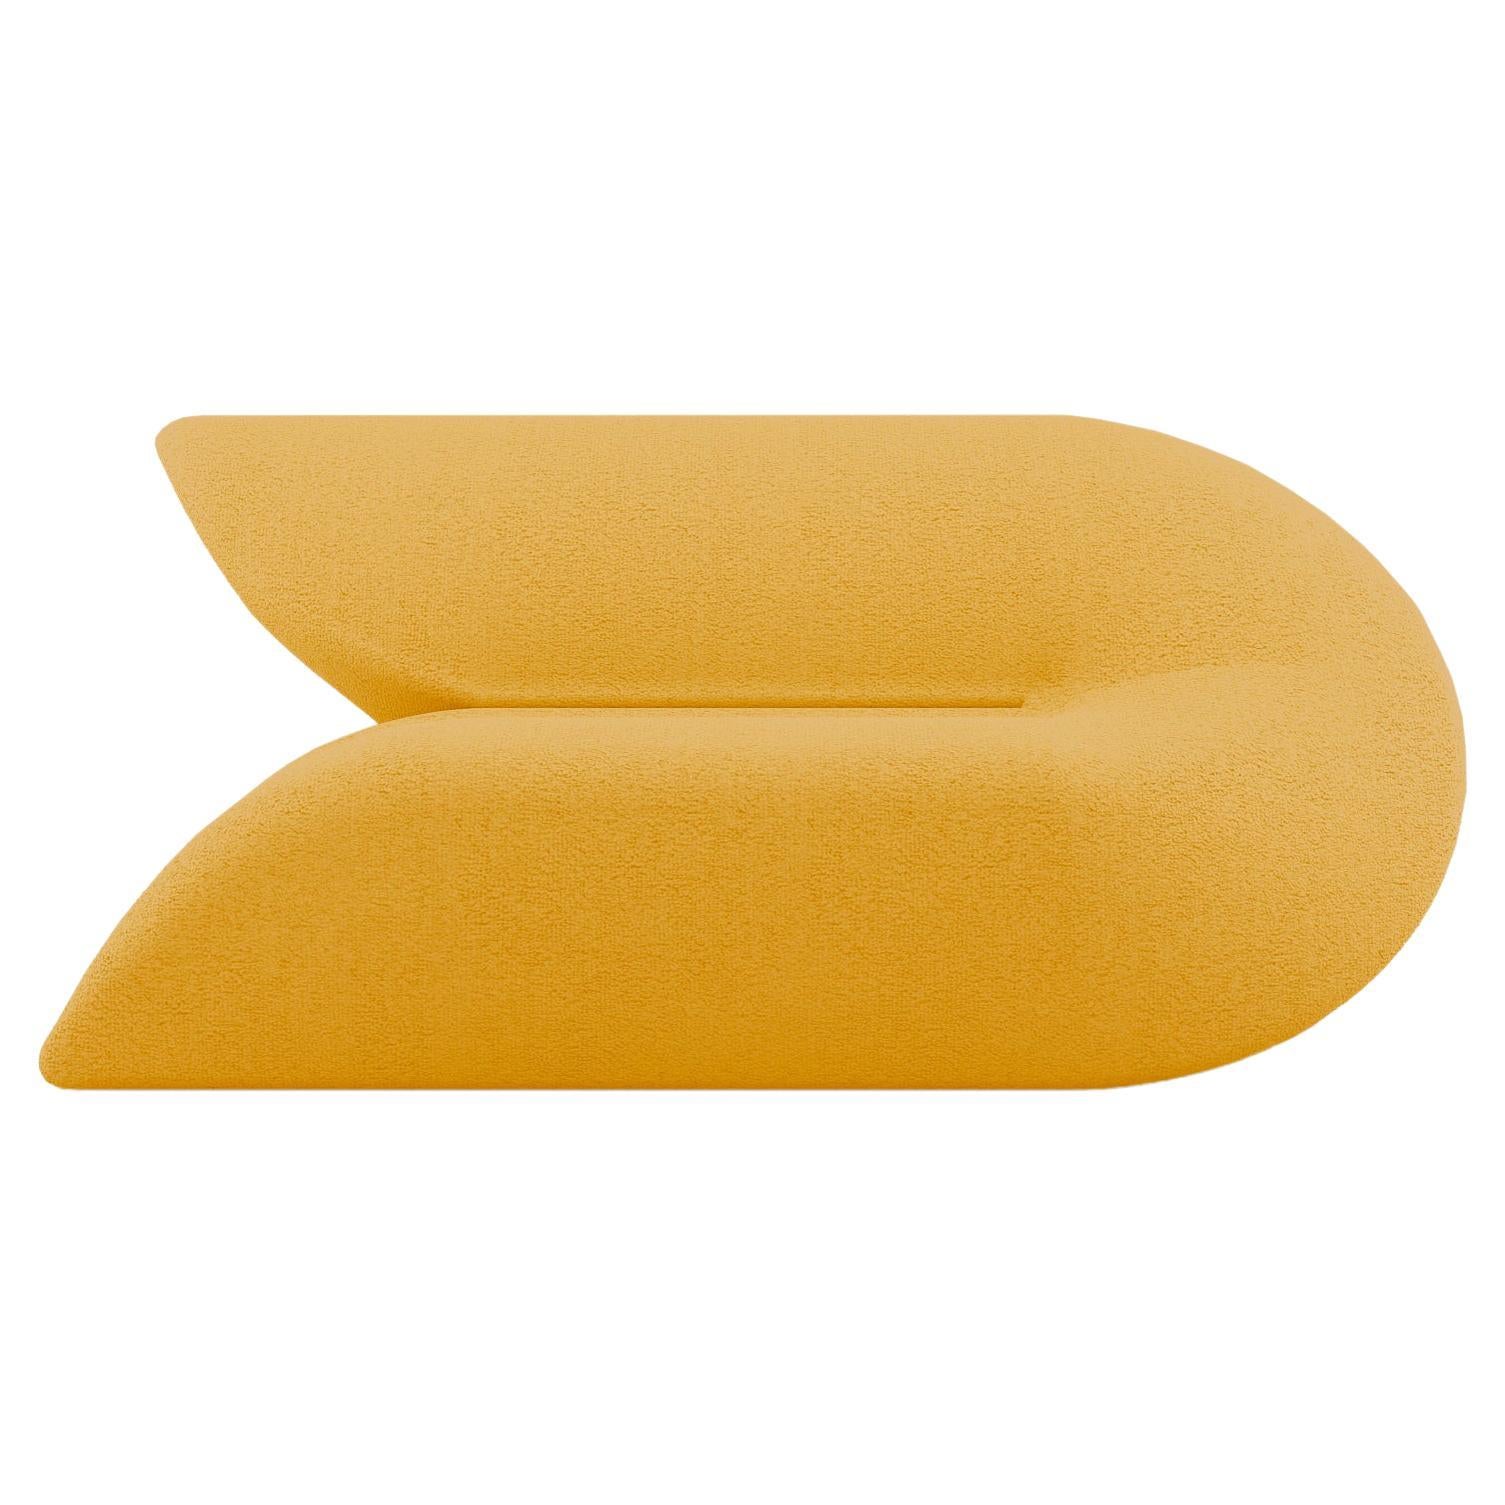 Delta Sofa - Modern Lemon Yellow Upholstered Two Seat Sofa For Sale